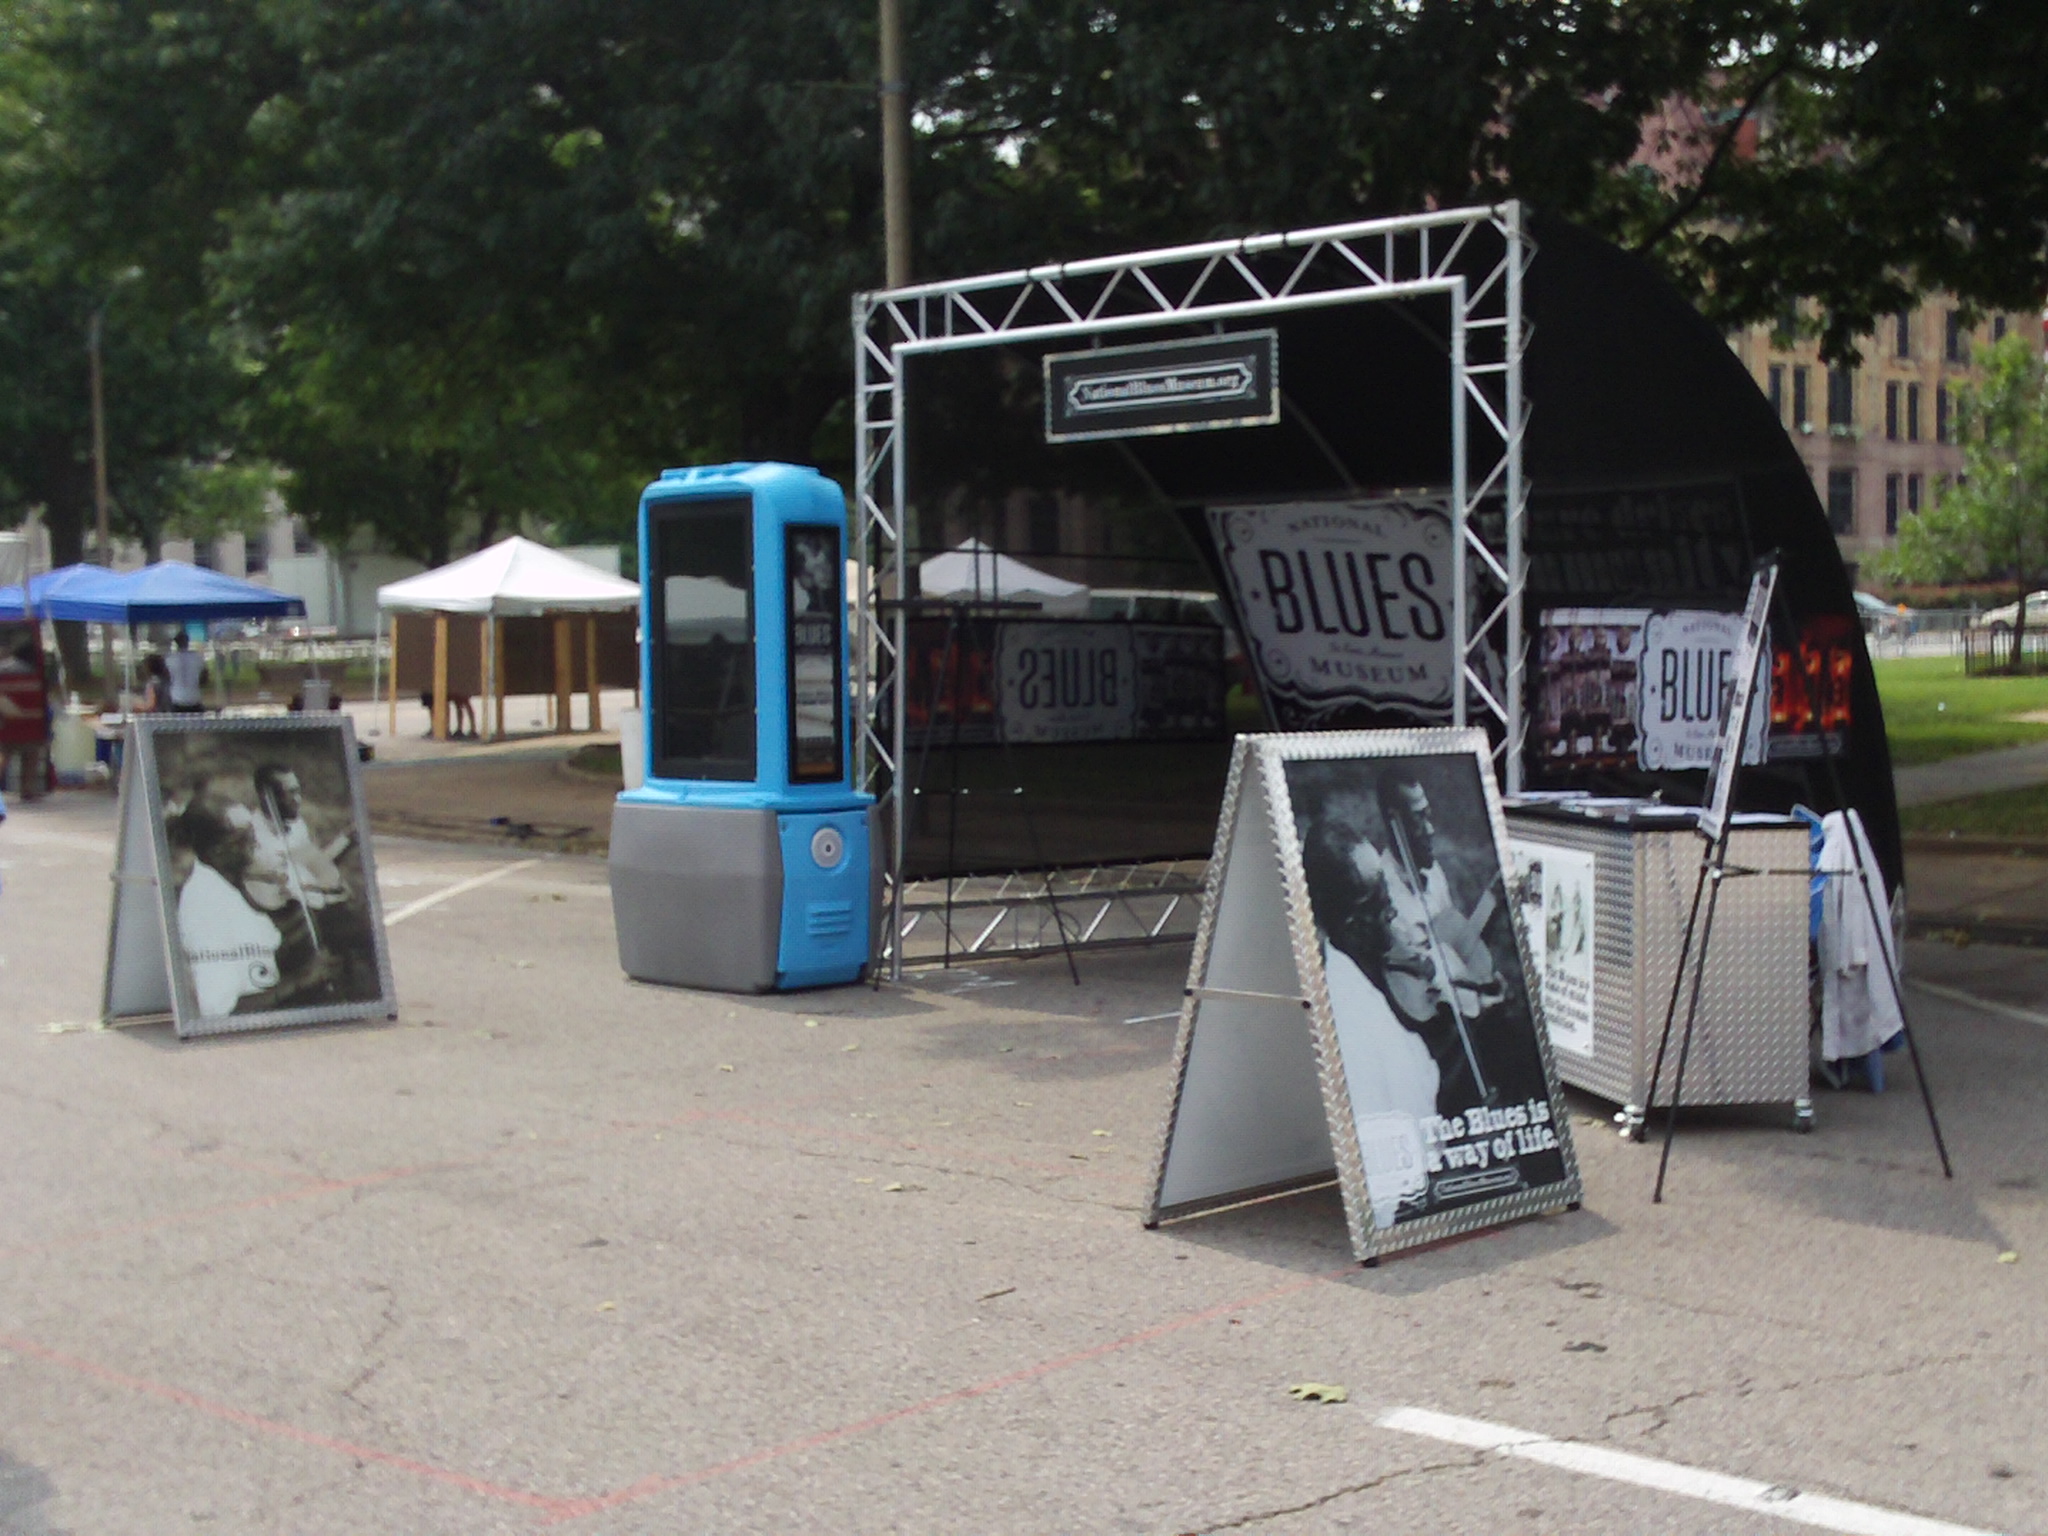 Blues Museum Kiosk at Bluesweek festival 2012